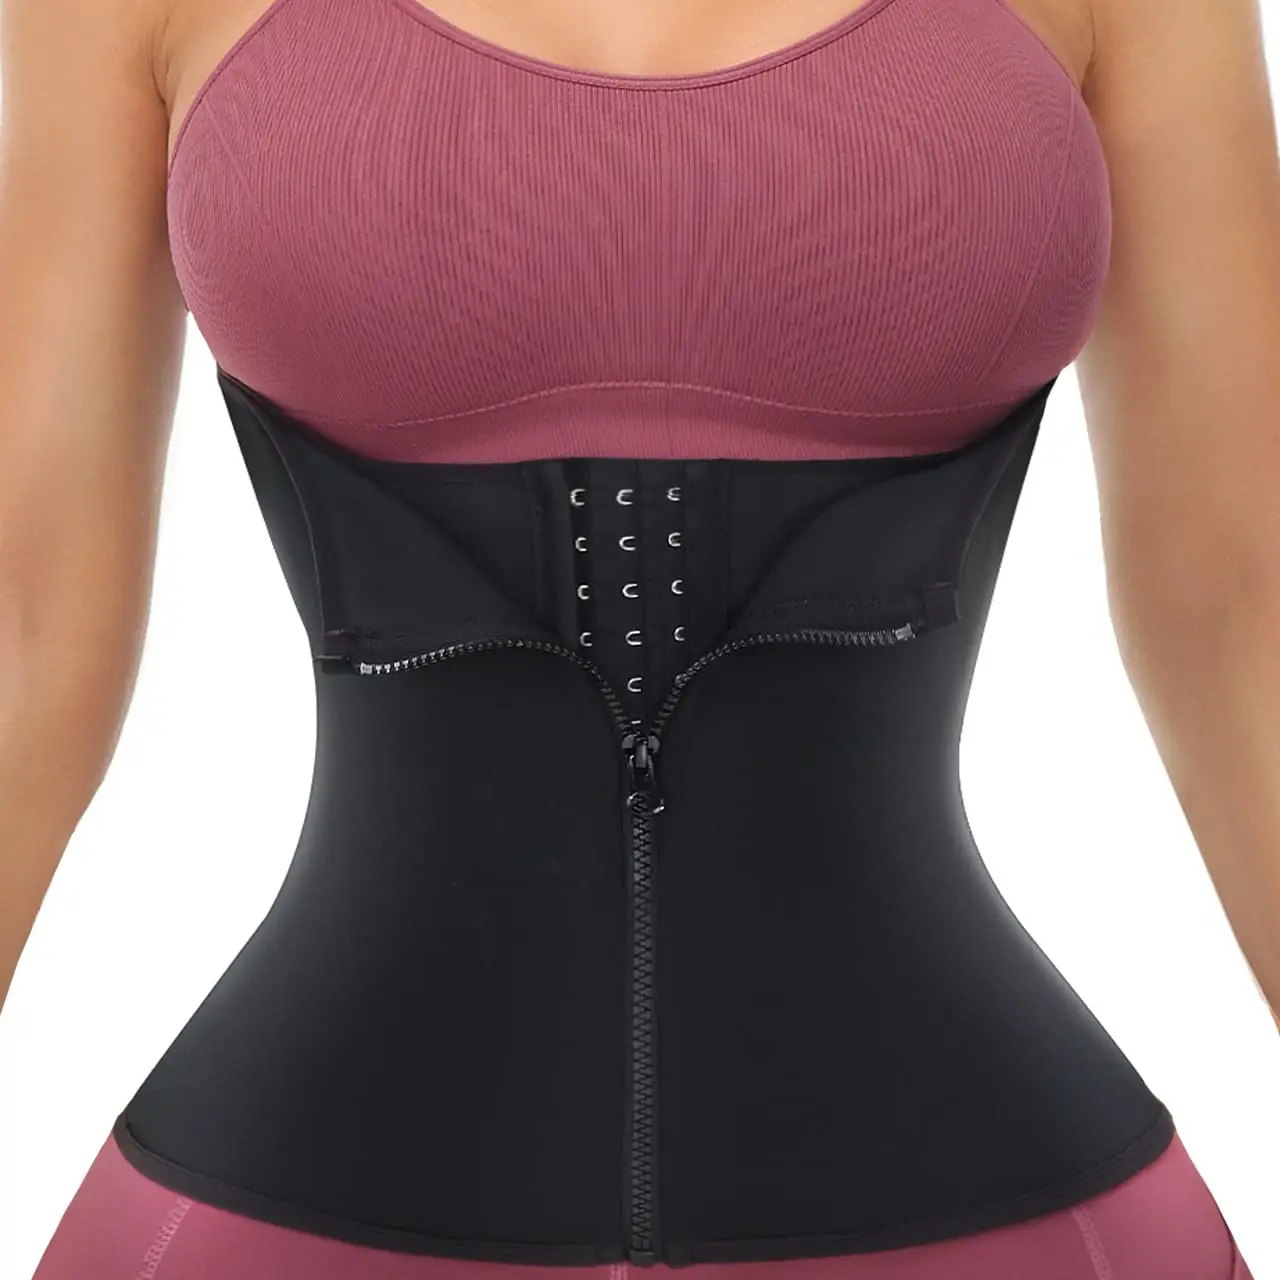 

Adjustable Slim Corset Waist Trainer for Women Lower Belly Fat Sweat Waist Trimmer Workout Body Shaper Cincher Sports Support